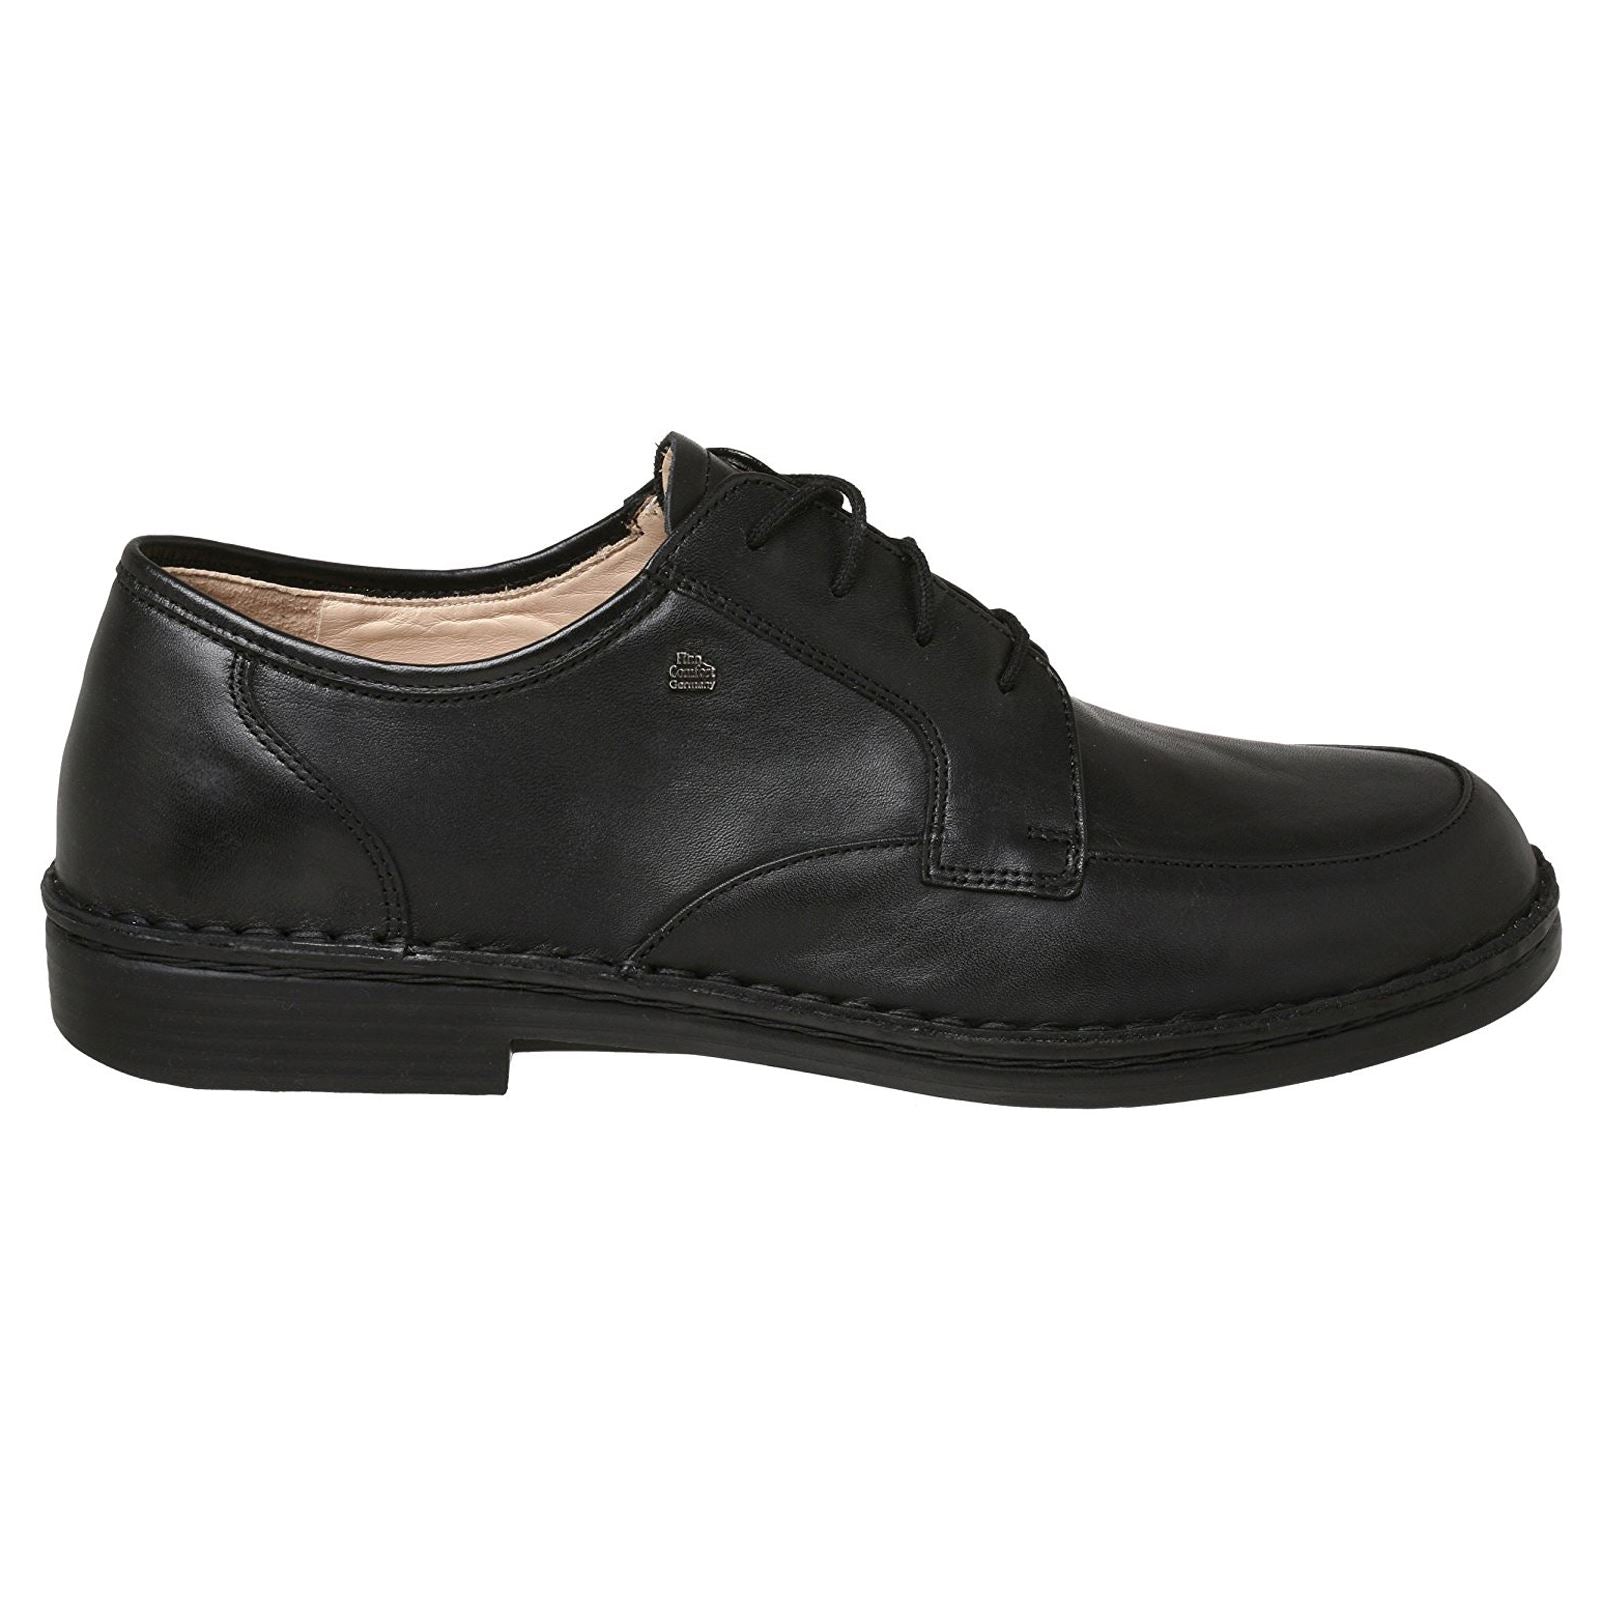 Finn Comfort Mens Hilversum Black Leather Shoes - UK 8